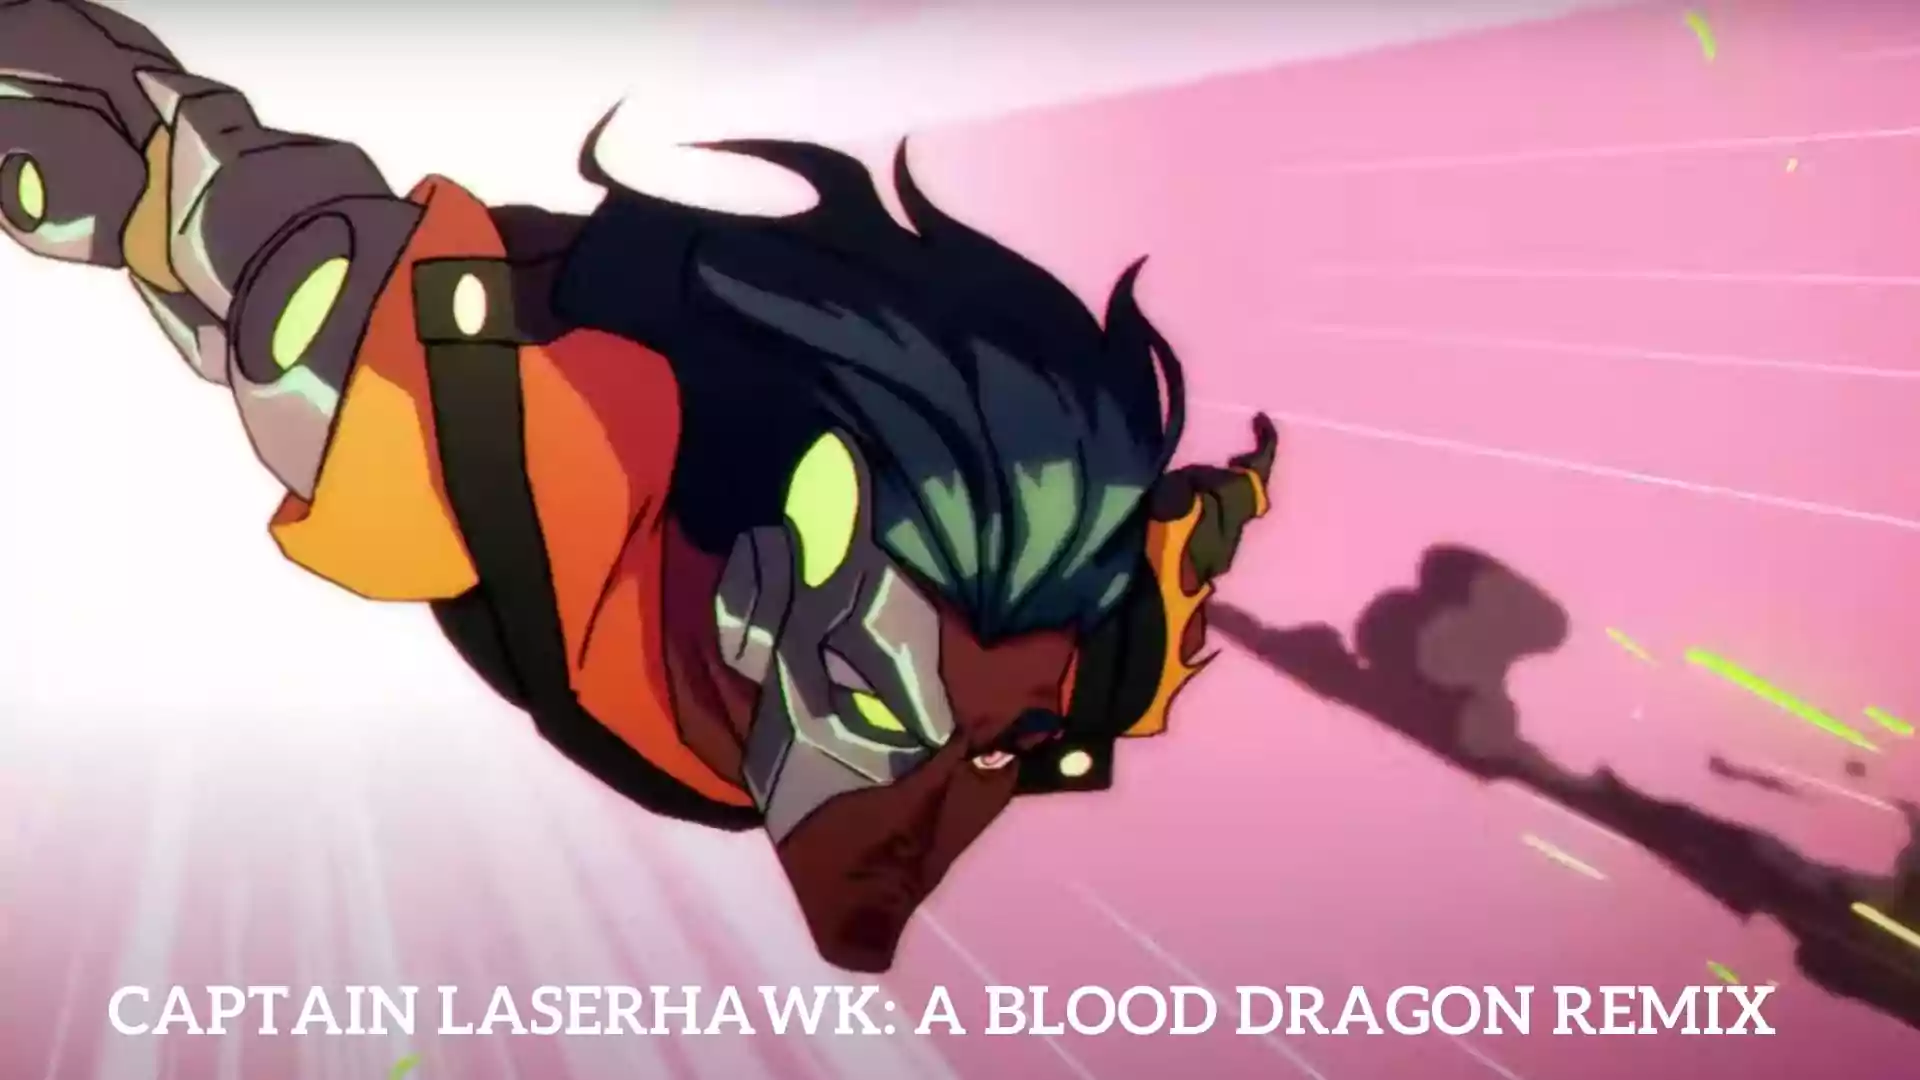 Captain Laserhawk A Blood Dragon Remix Wallpaper and Image